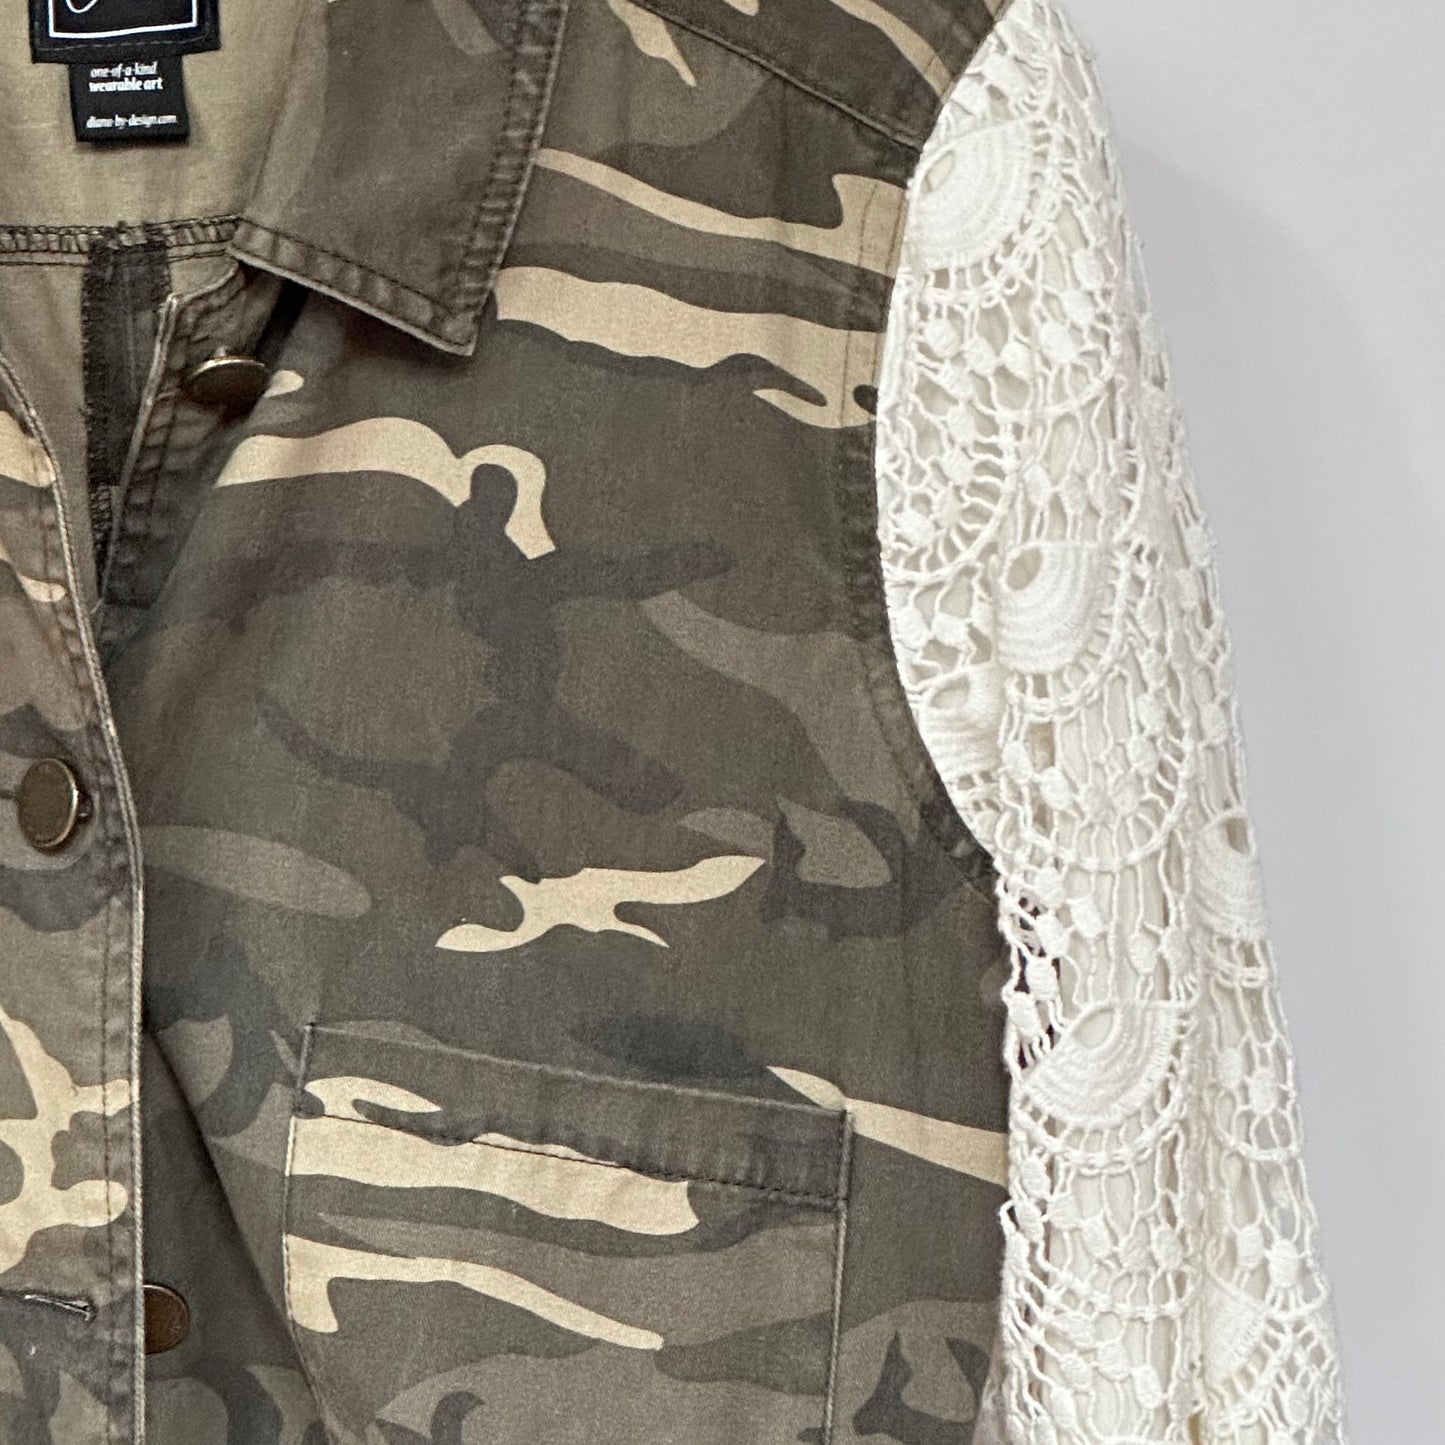 ivory lace + camo denim trench style jacket